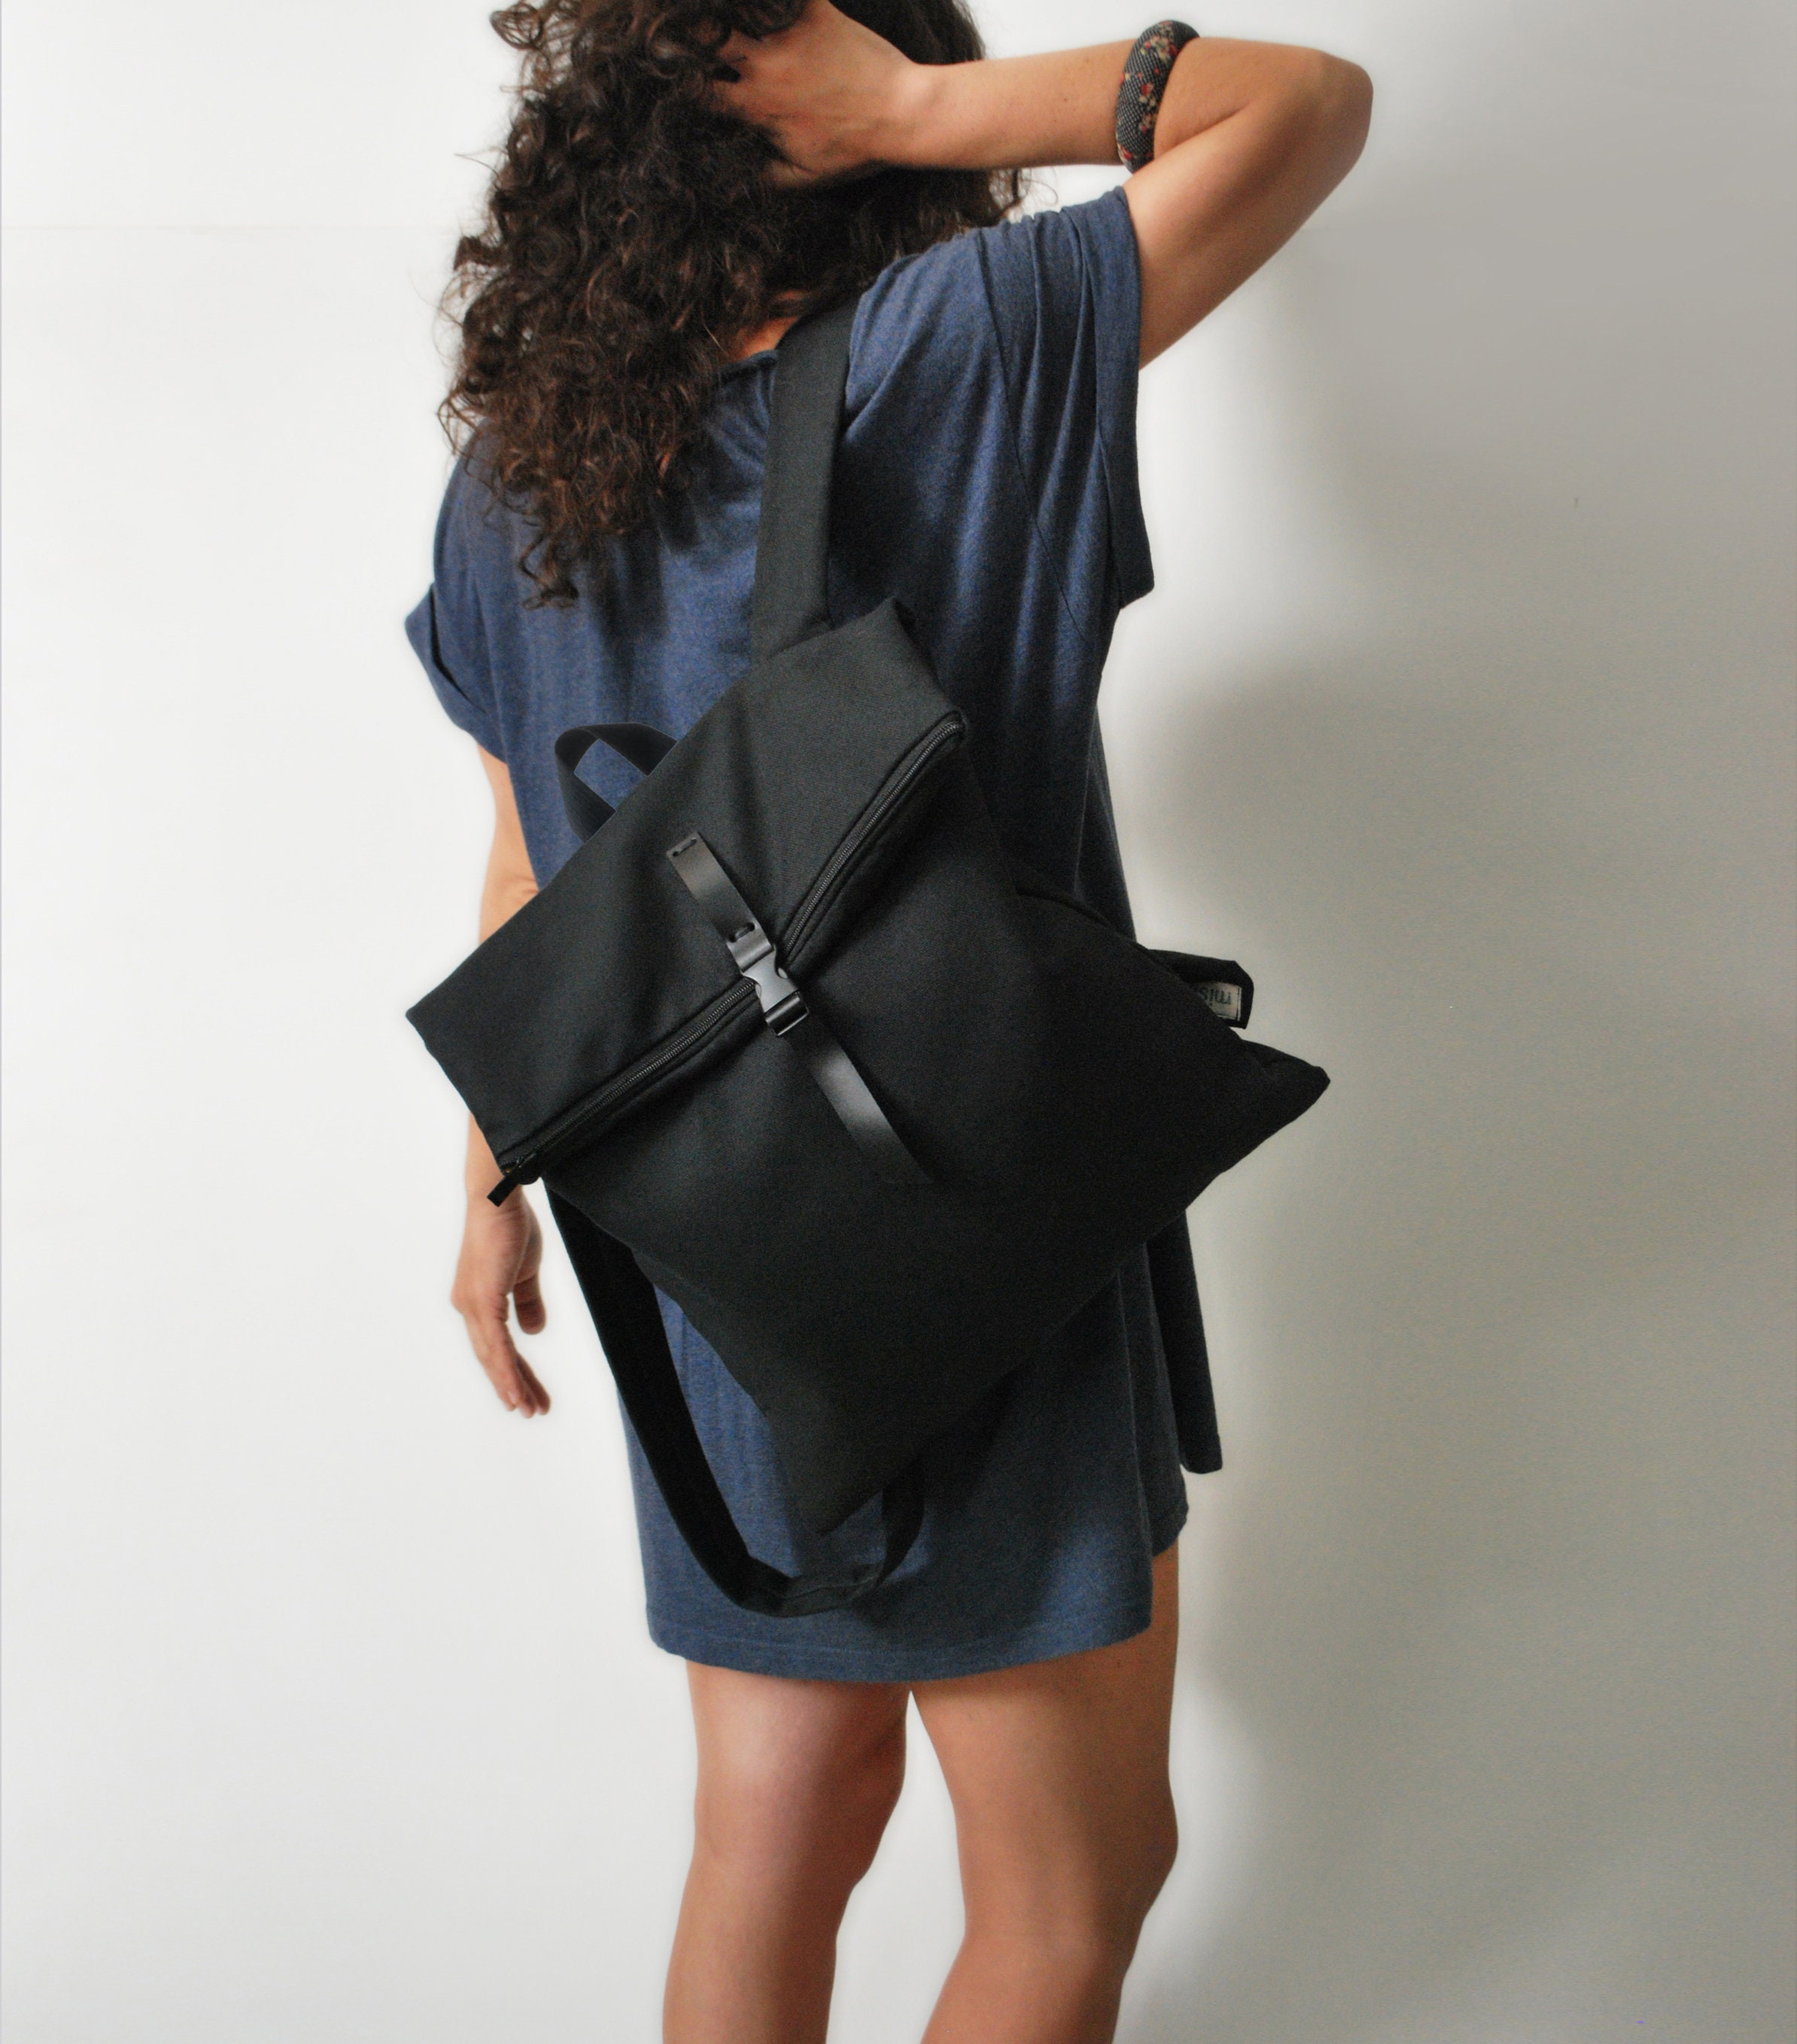 Convertible Backpack Anti Theft Purse Bag Waterproof Black Canvas